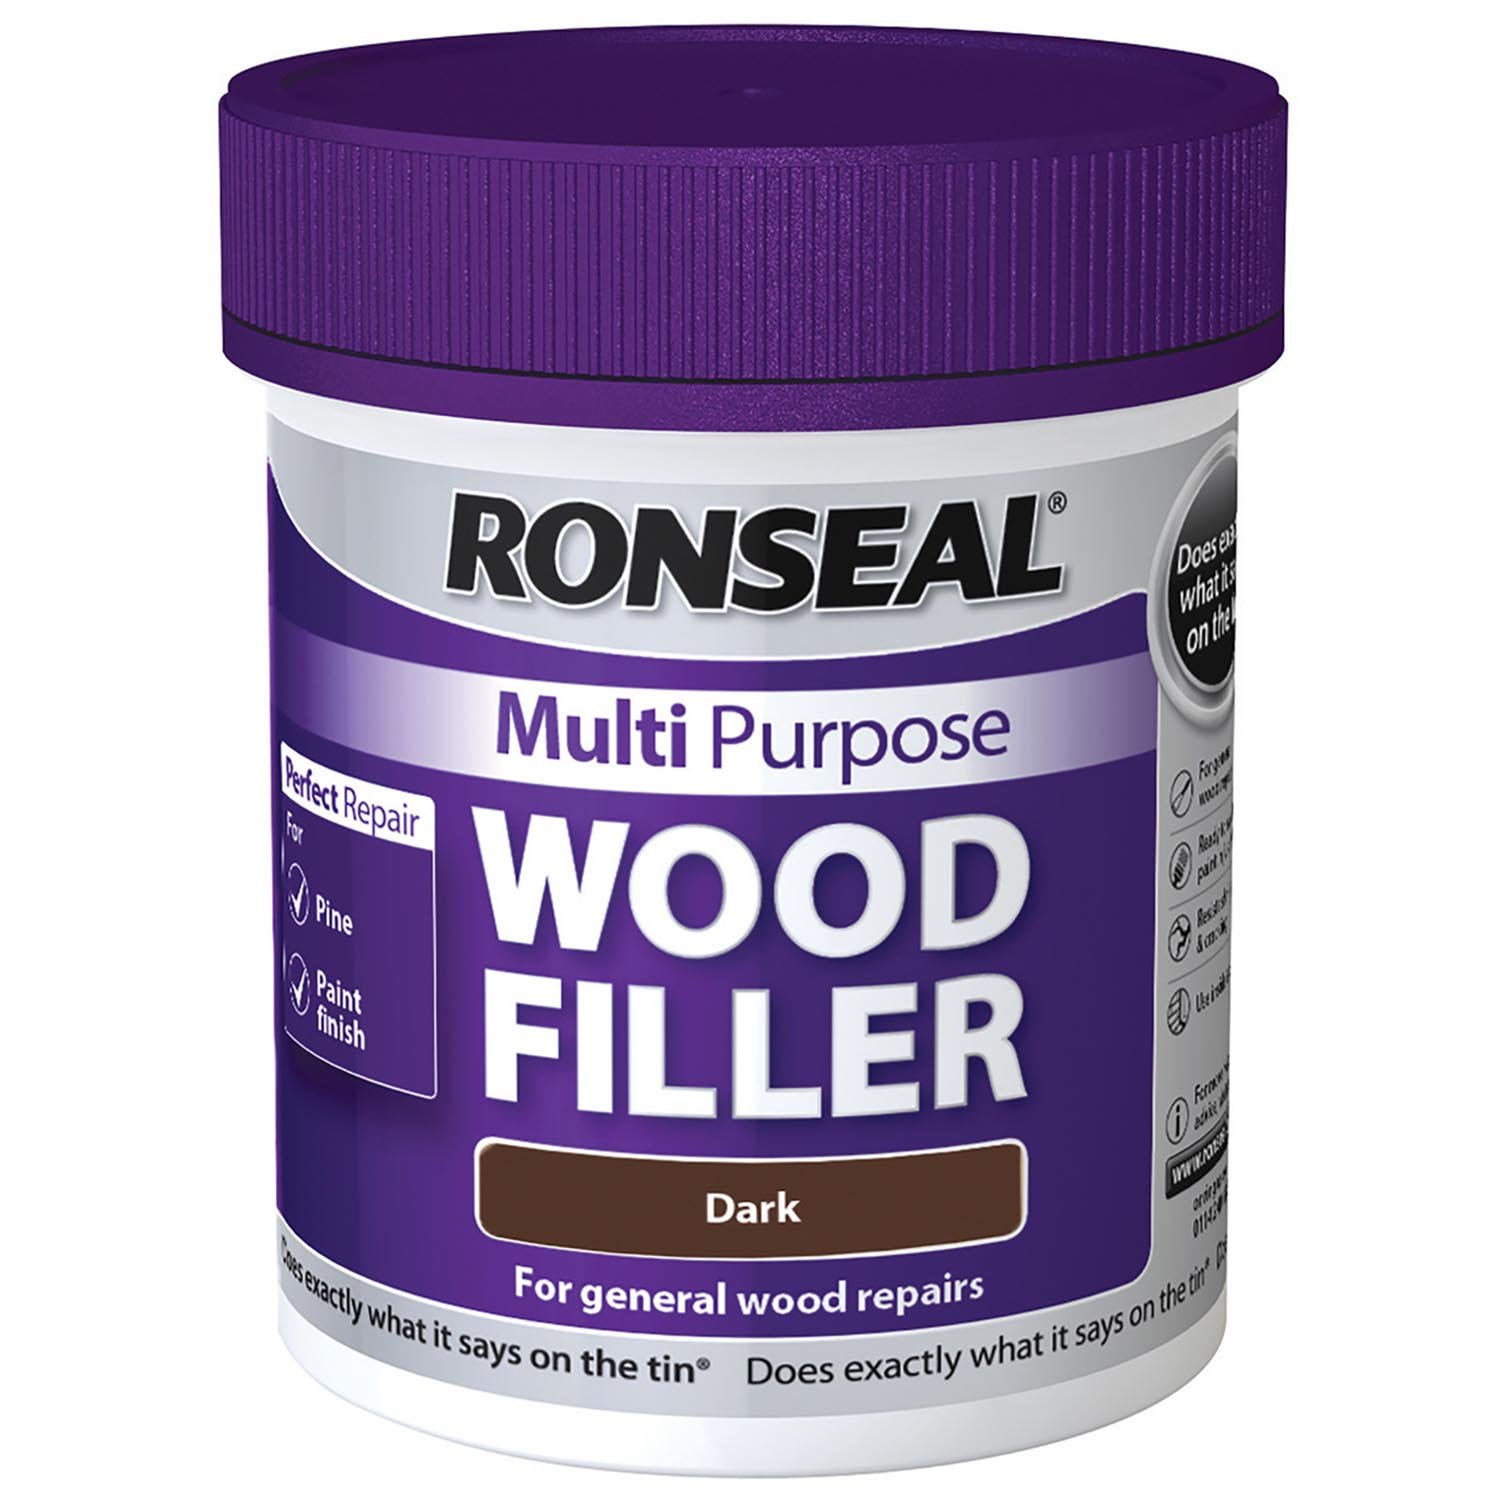 Ronseal Multi Purpose Dark Wood Filler 465g Image